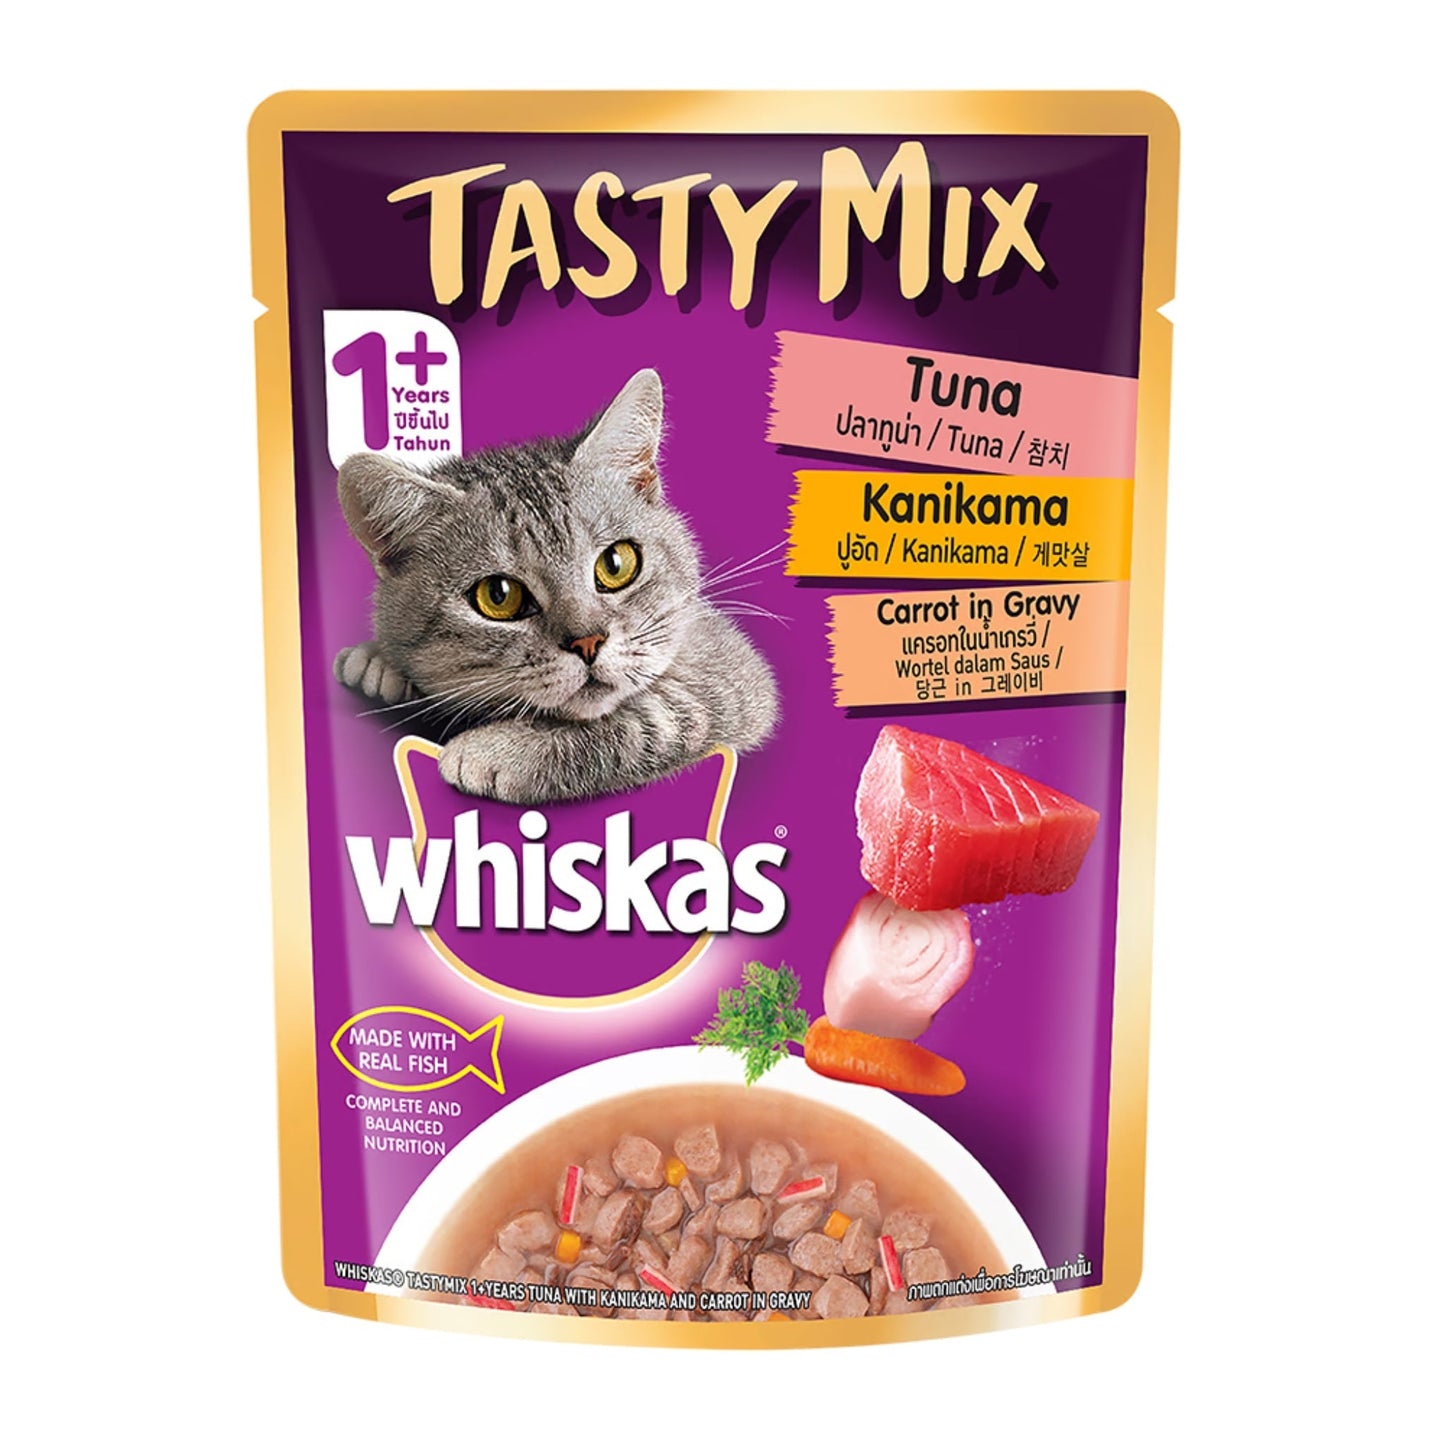 Whiskas Adult Cat Tasty Mix Tuna Kanikama Carrot in Gravy - Pack of 18